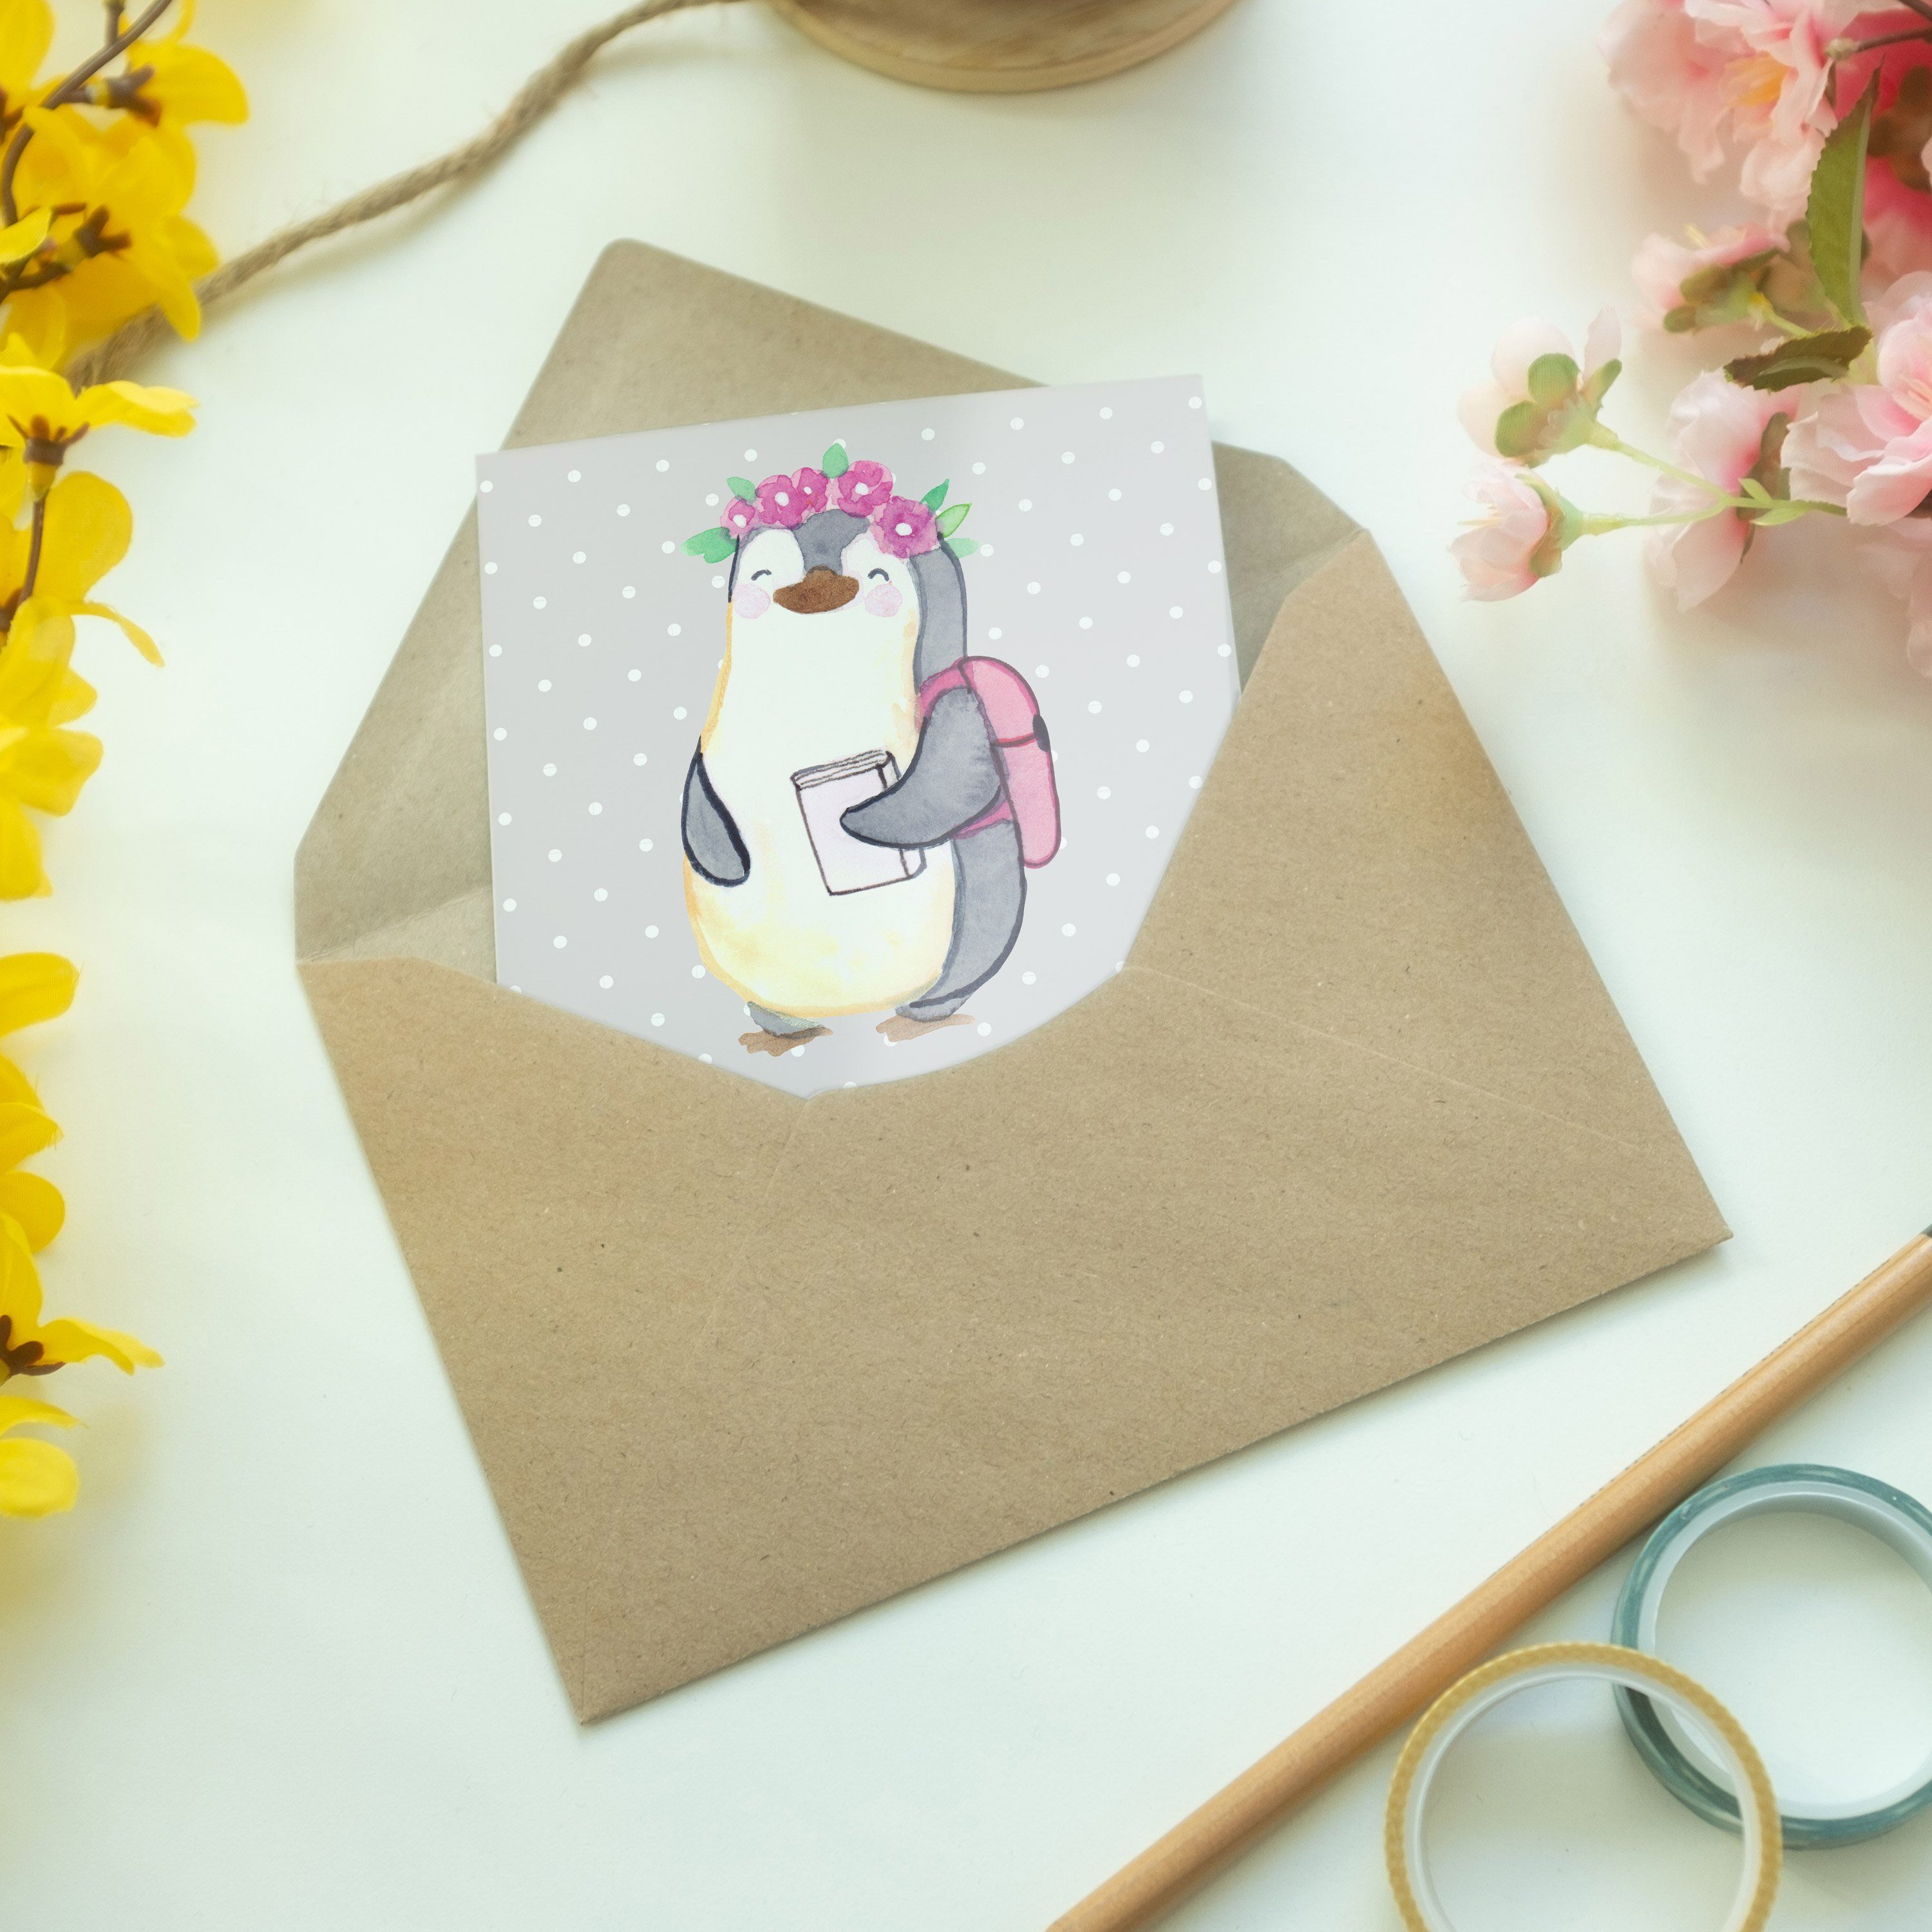 Mr. Pinguin Grau & Grußkarte - - Opa, der Panda Welt Glückw Enkelin Mrs. Pastell Beste Geschenk,